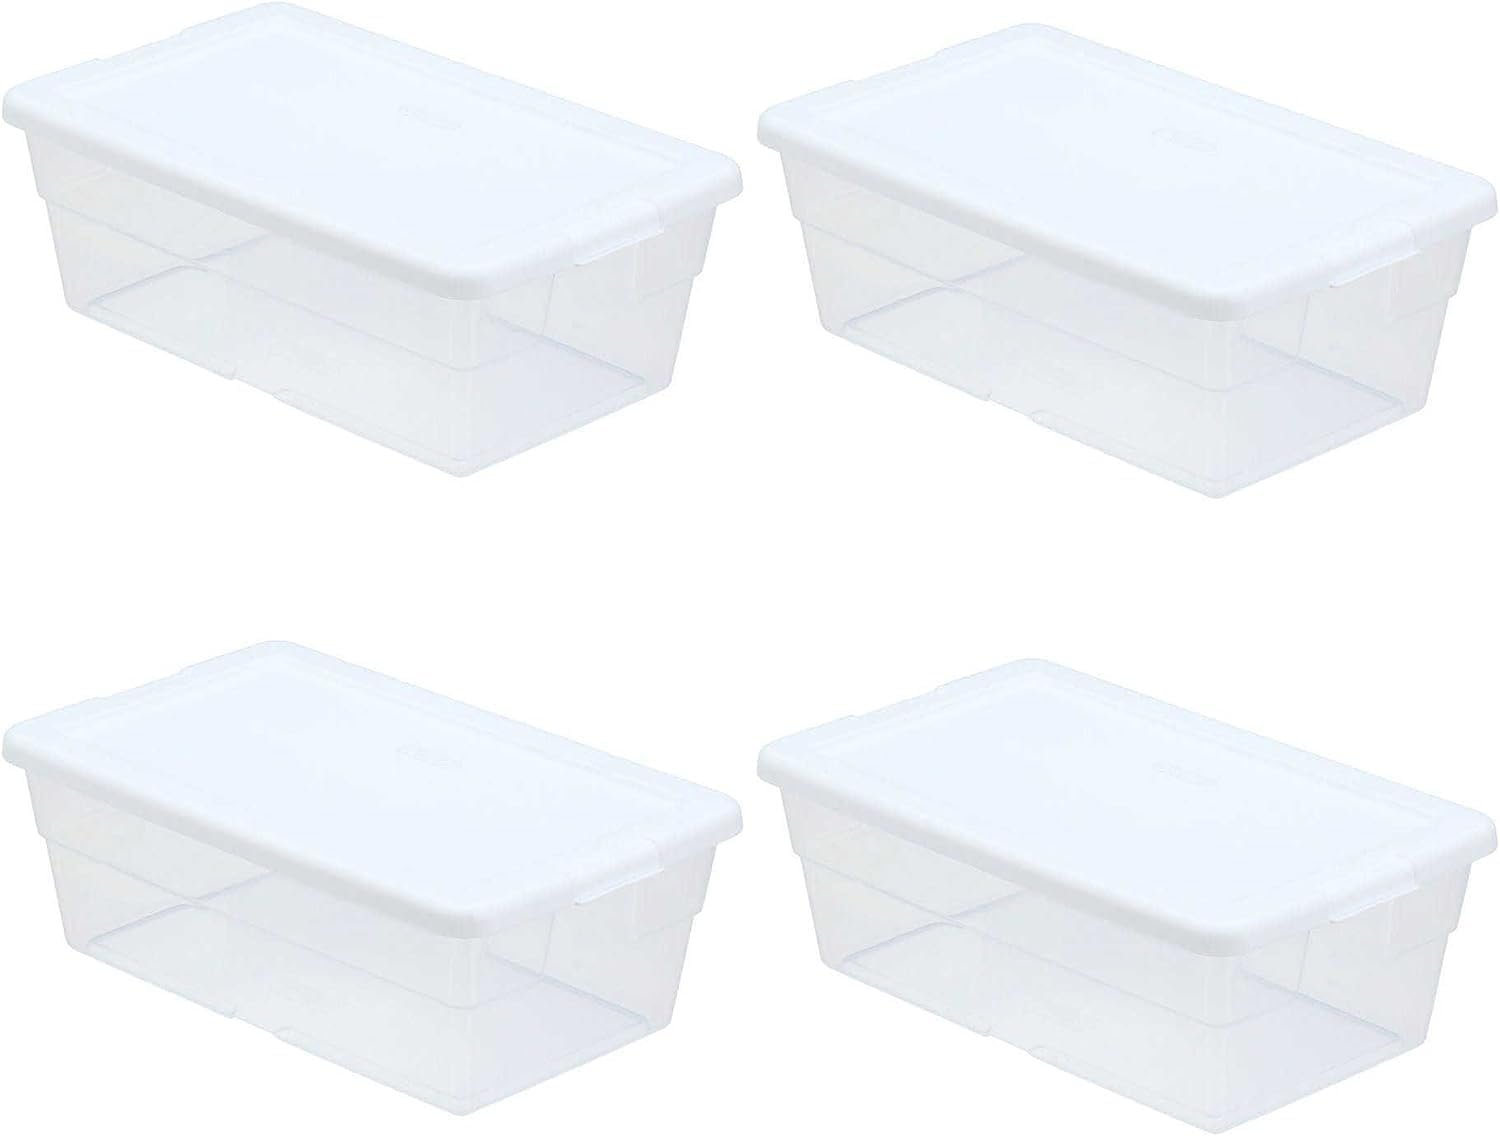 Sterilite Storage Box 6 Qt. Clear Review